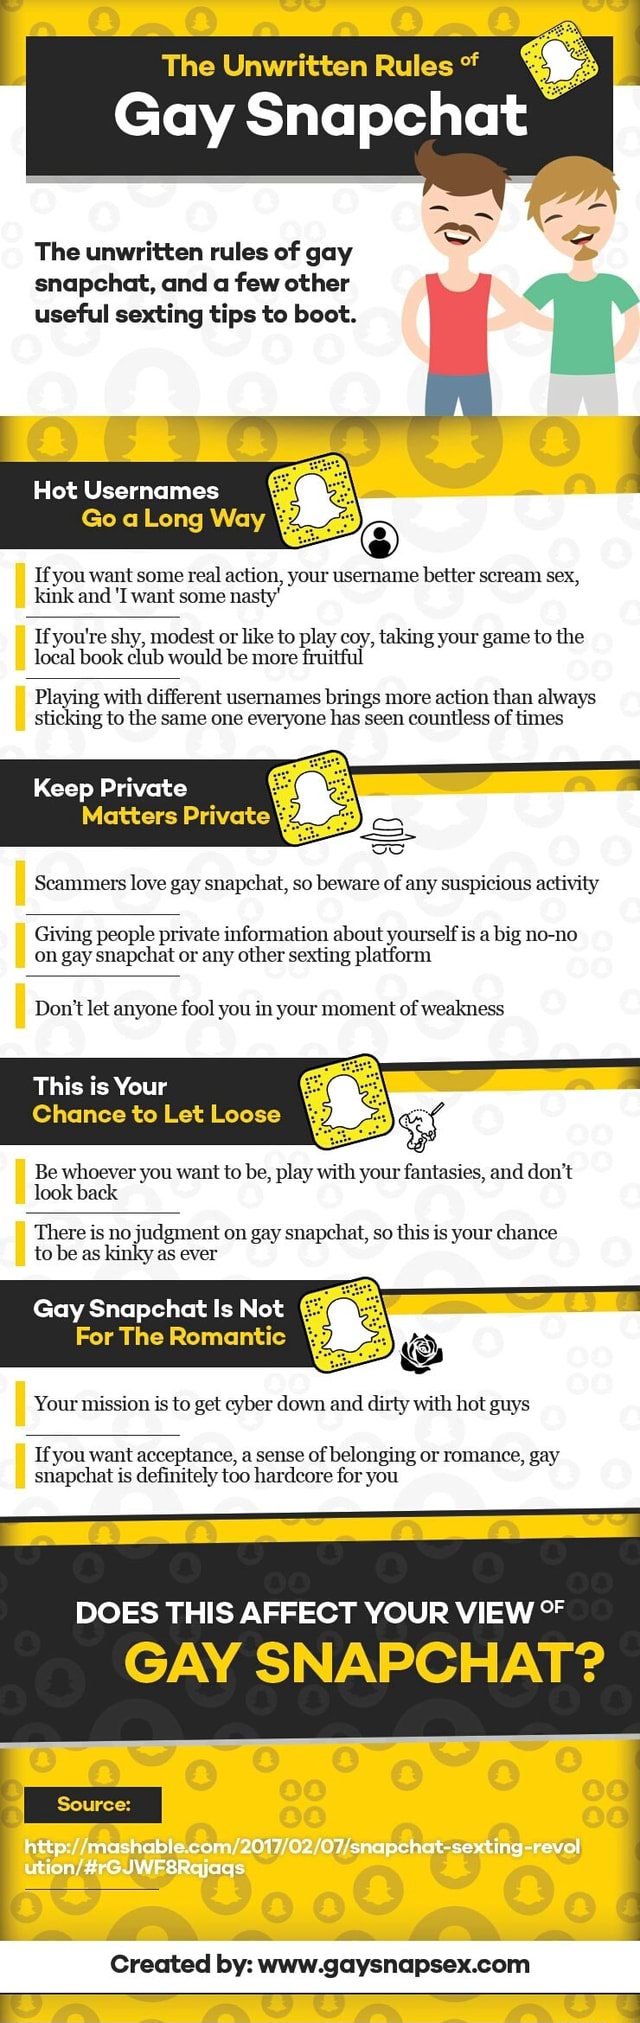 18 yo gay snapchat users